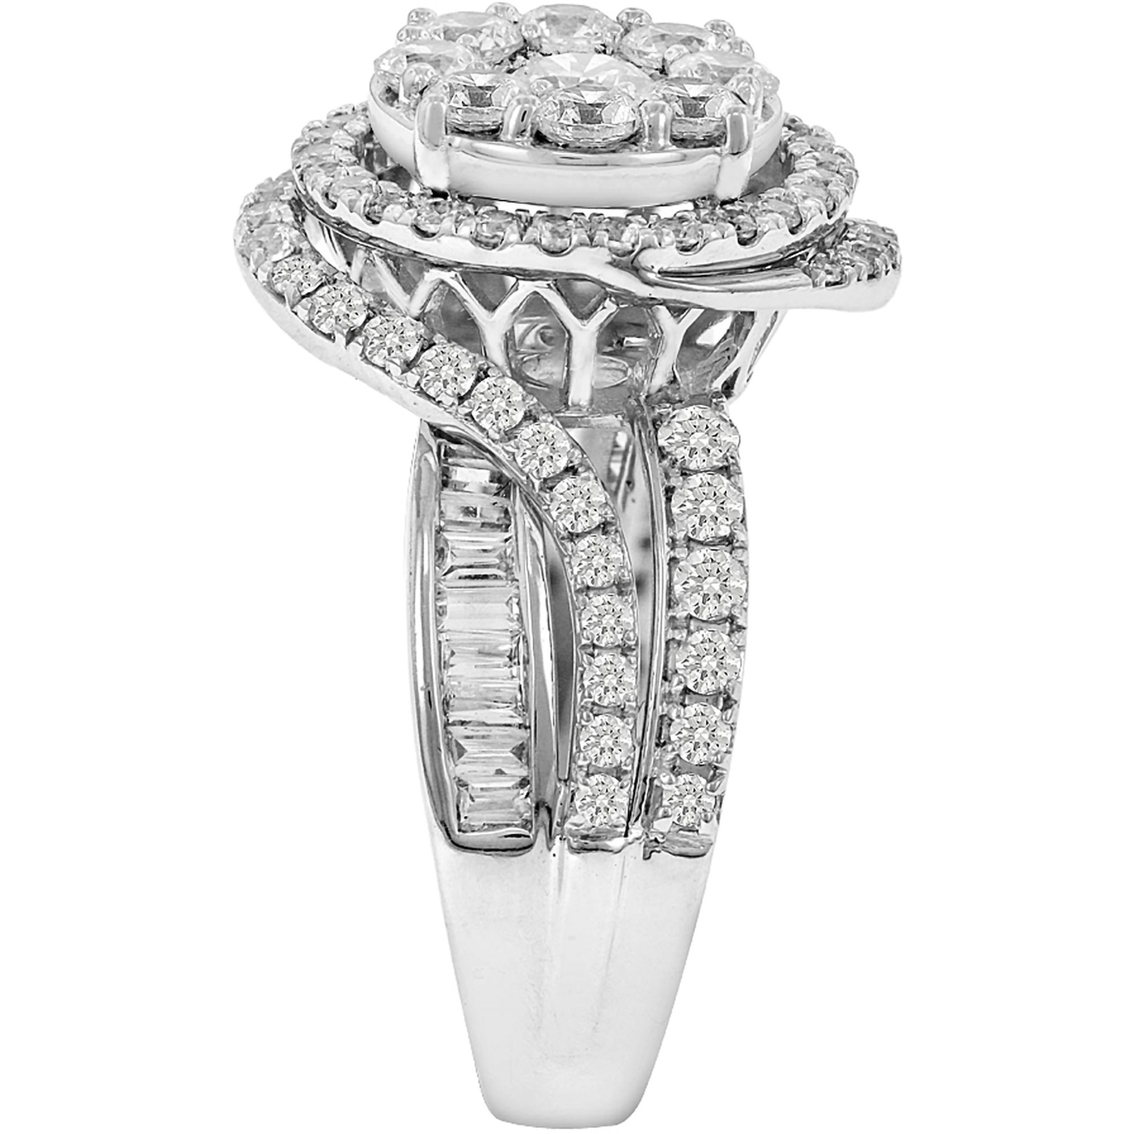 10K White Gold 2 CTW Diamond Ring, Size 7 - Image 3 of 4